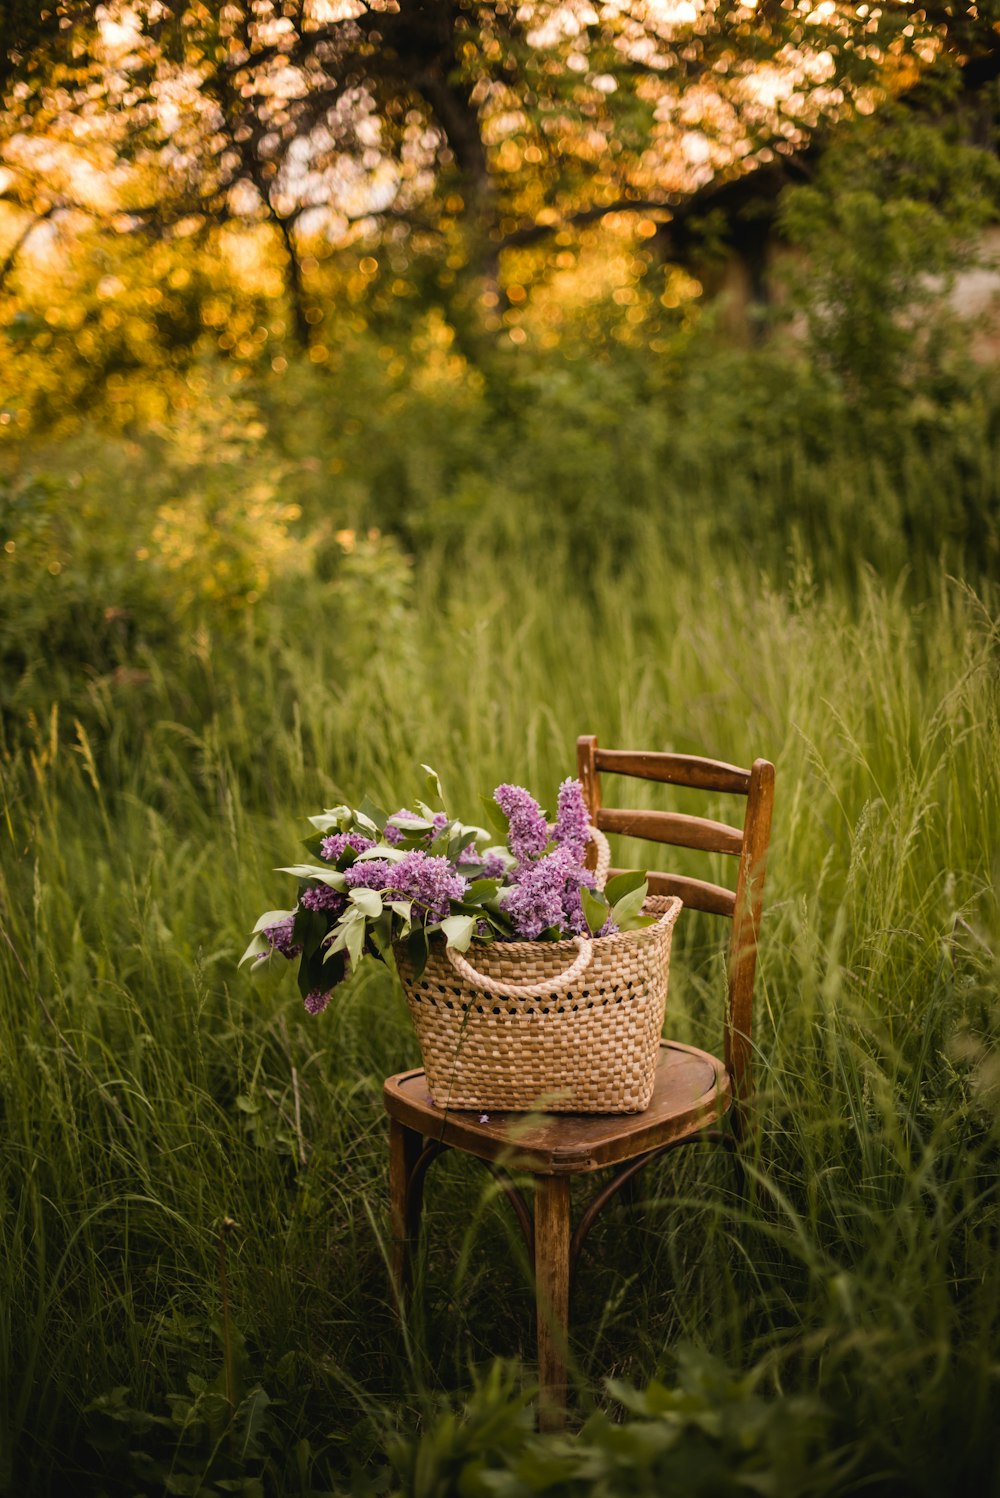 purple flowers in brown woven basket on brown wooden chair